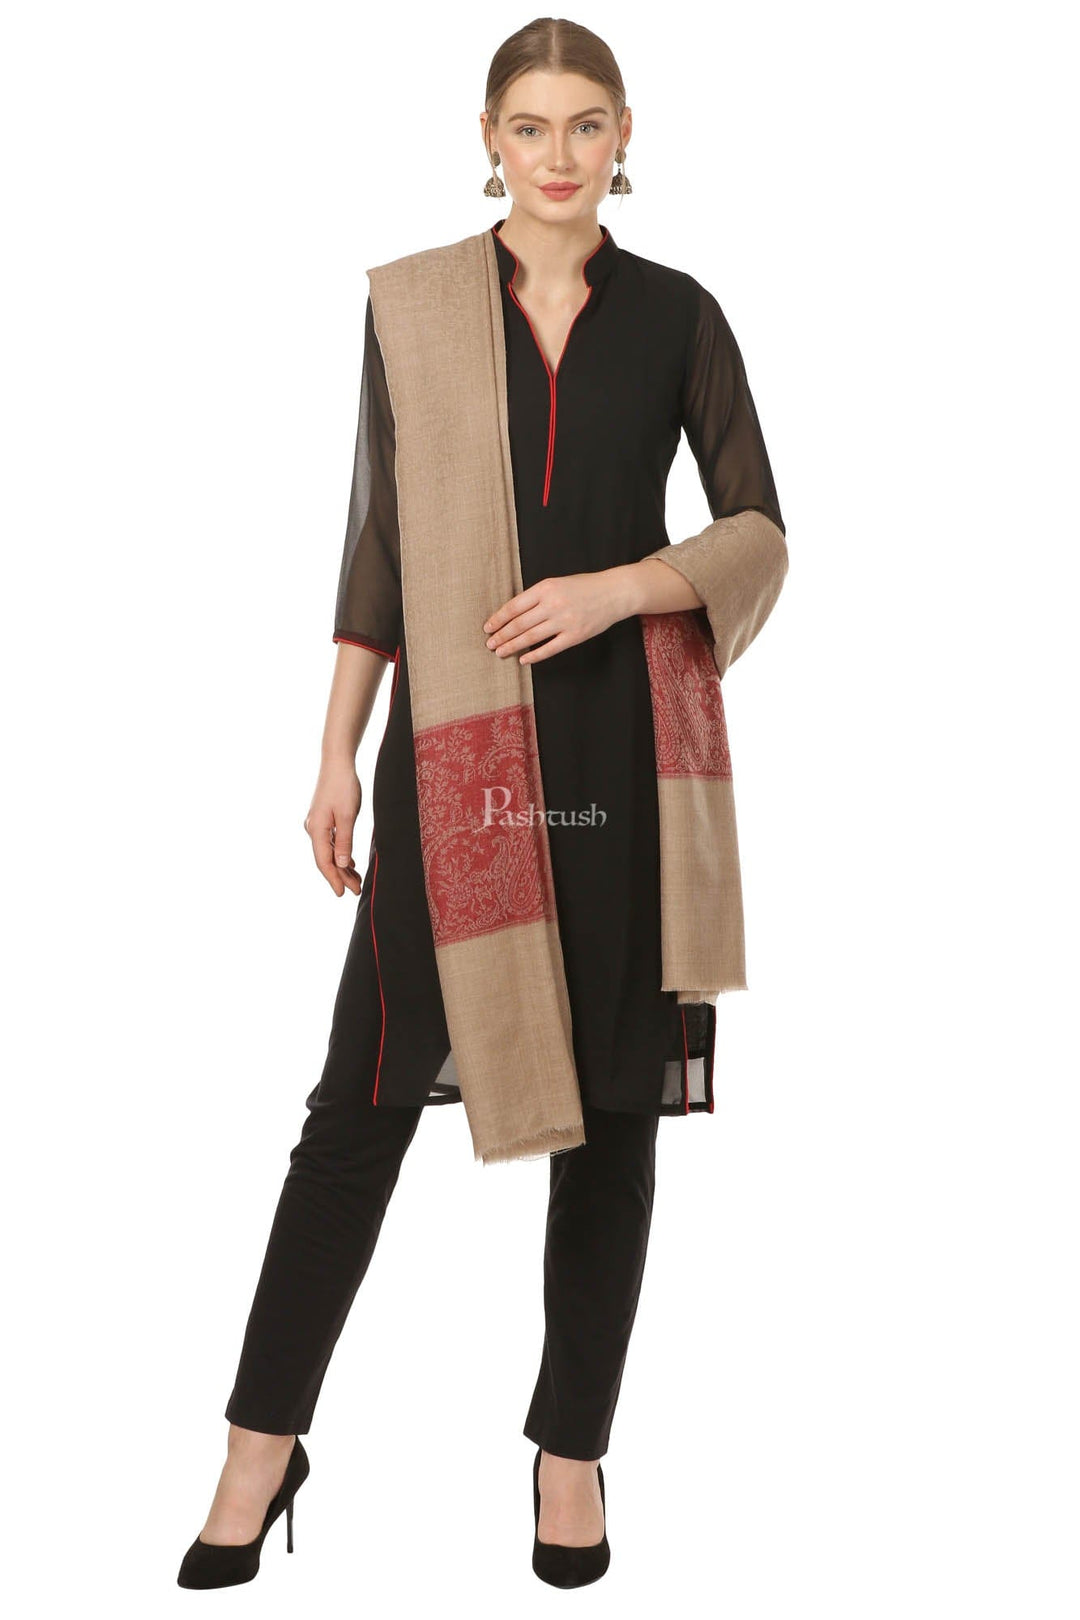 Pashtush India Womens Shawls Pashtush Womens Extra Fine Wool Blend Shawl, Jacquard, Soft, Warm And Ultra Light Weight